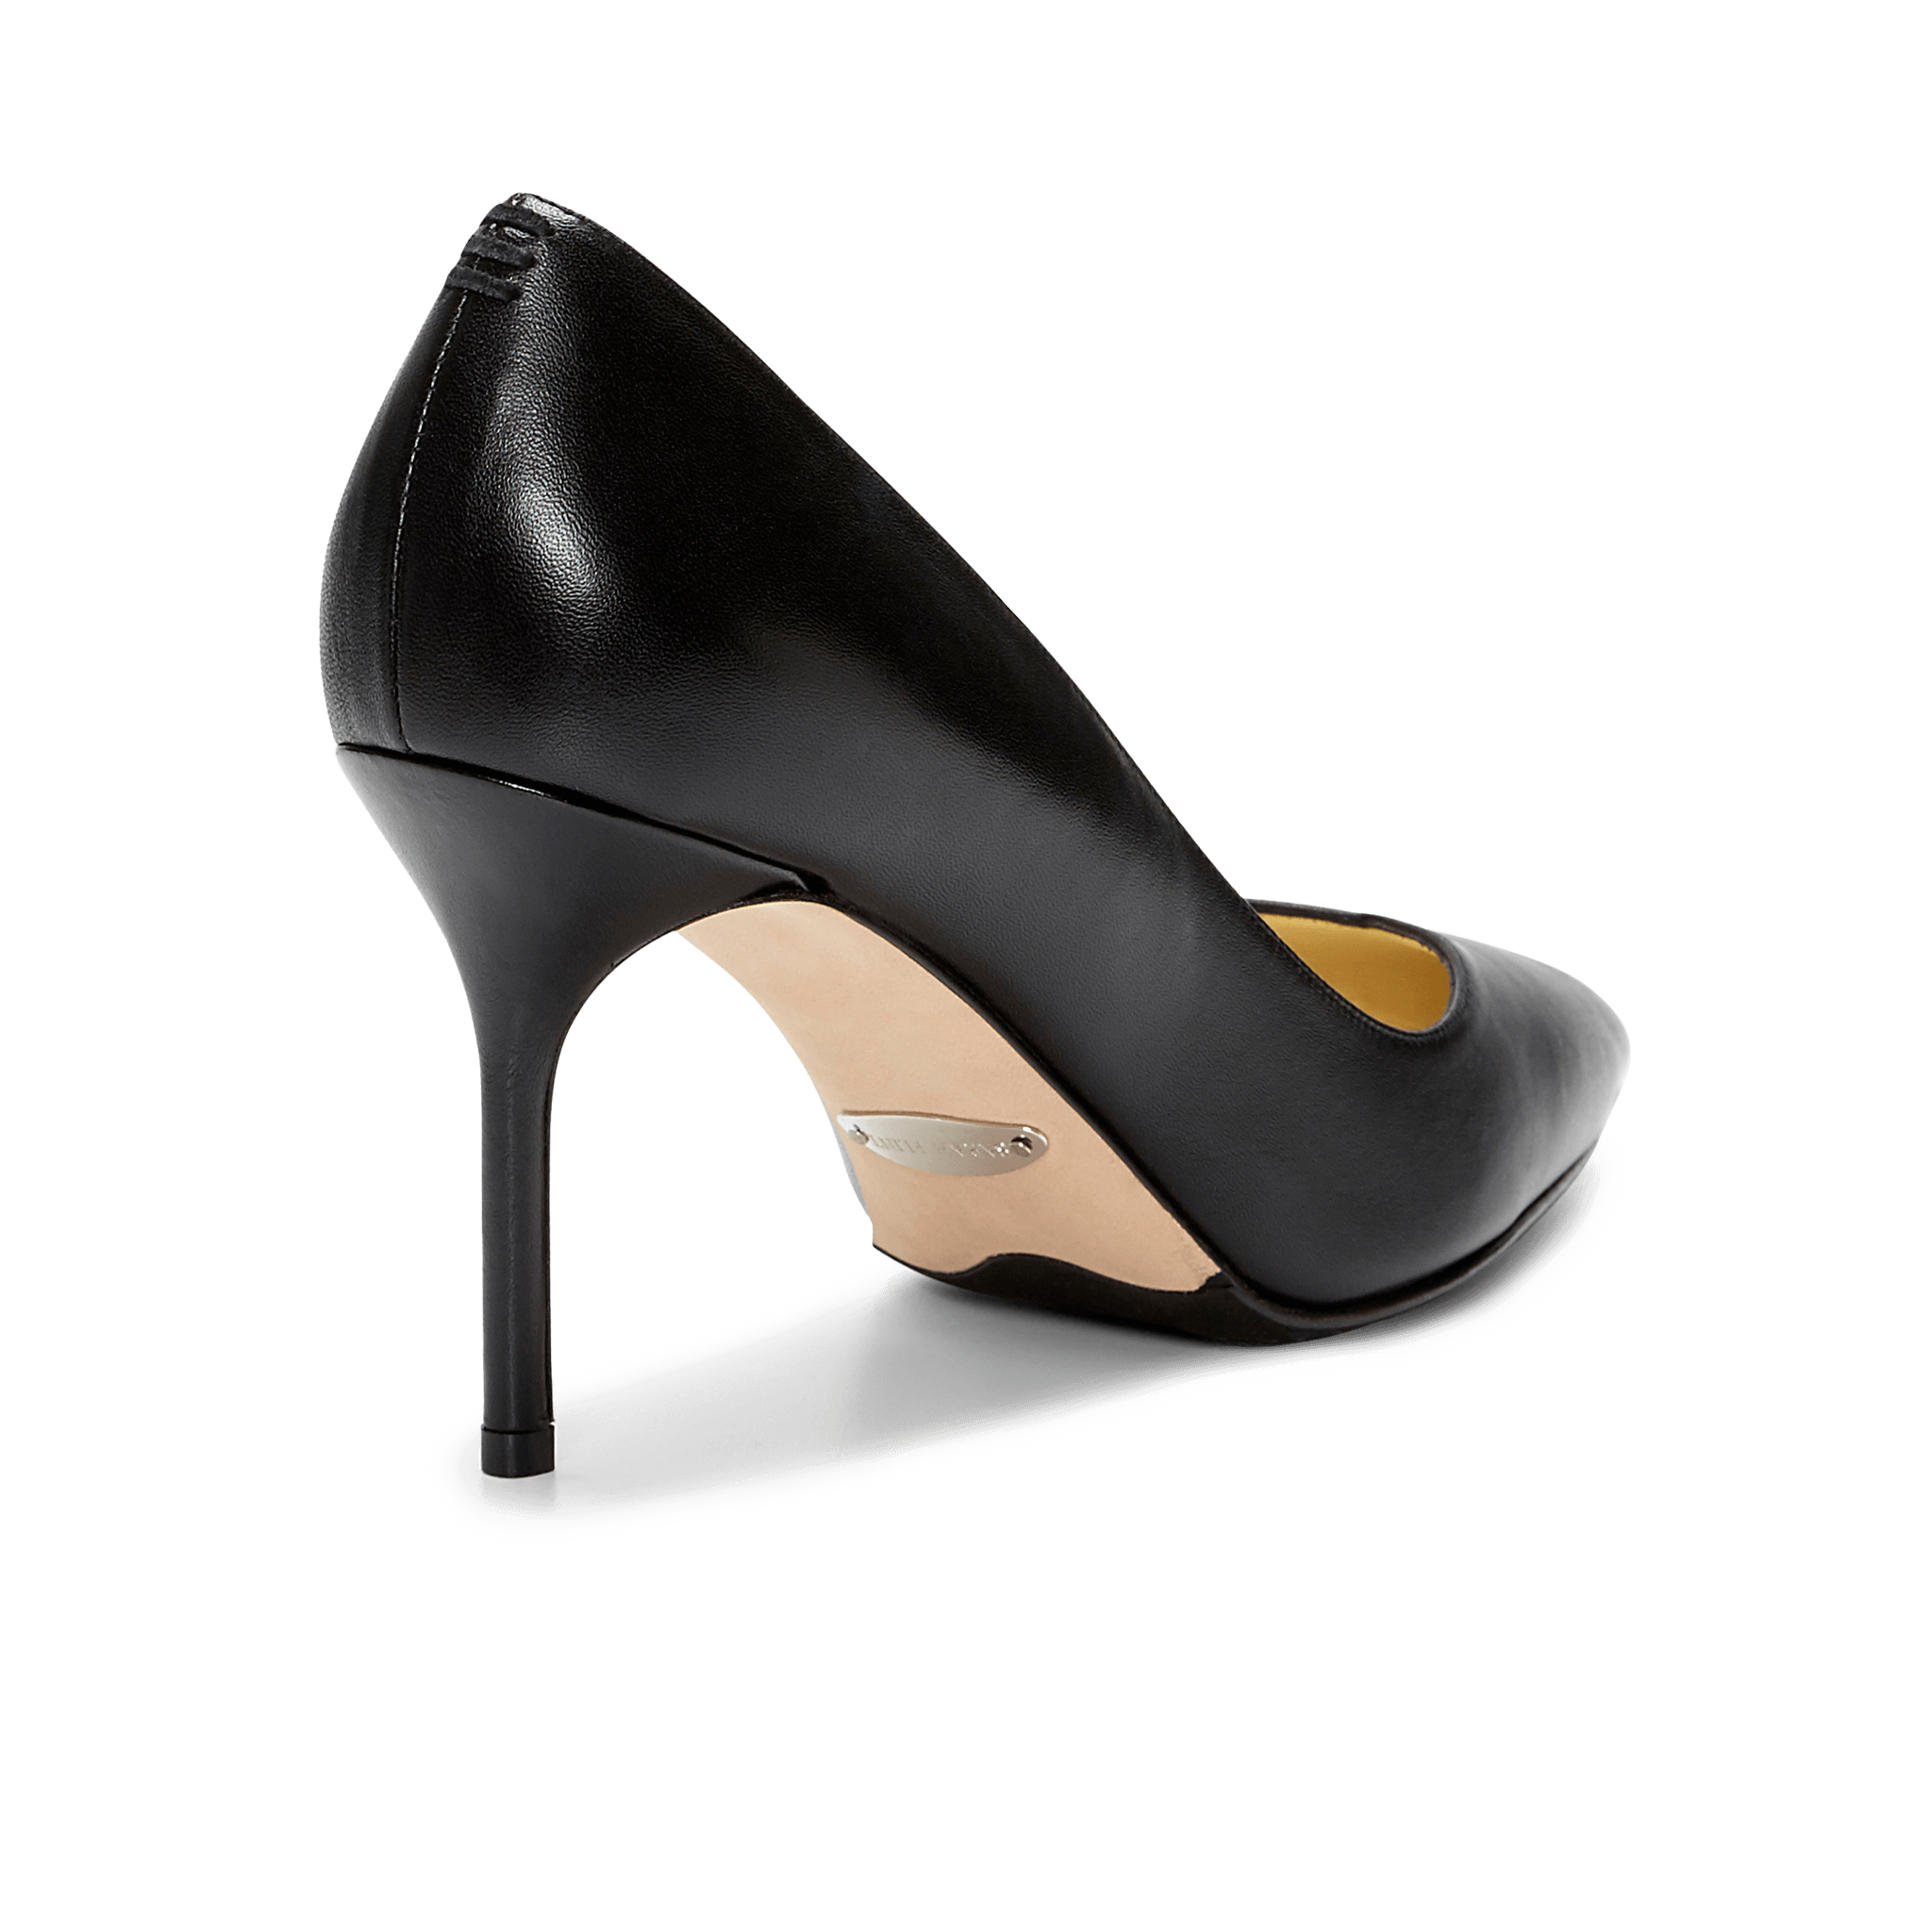 Classy Pure Black Round Toe High Heels Fashion Shoes | Shoes heels classy,  Fashion high heels, Fashion shoes